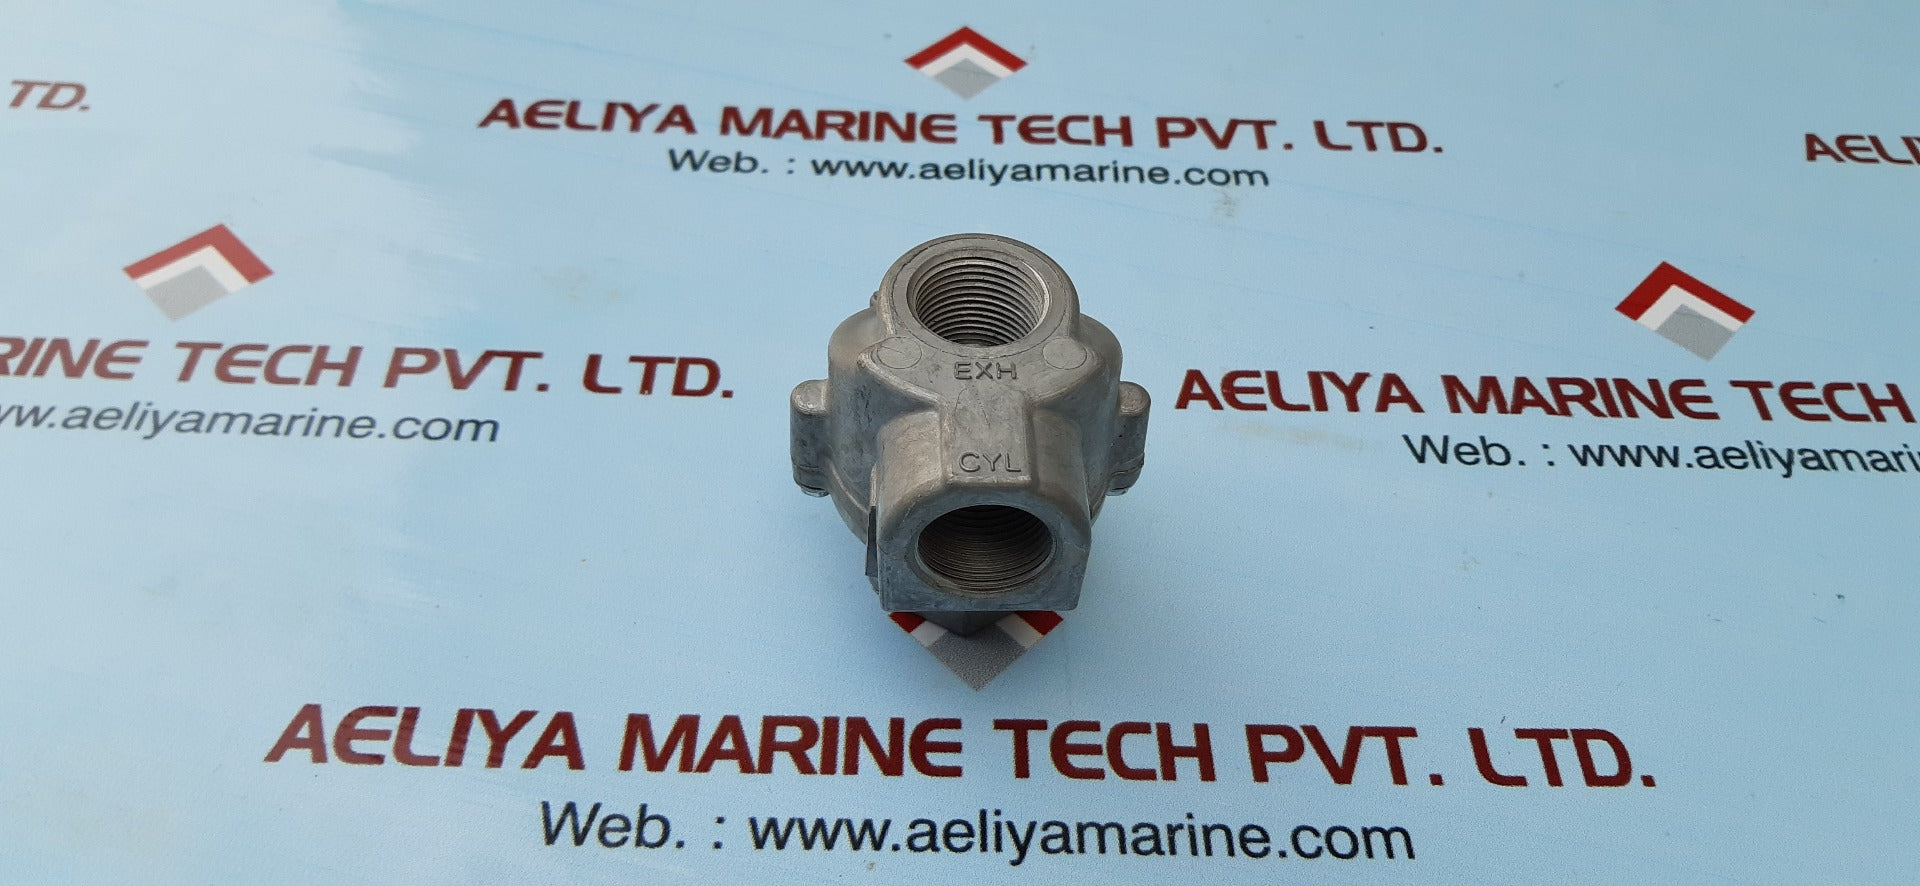 Deltrol ev3 5 a2 exhaust valve